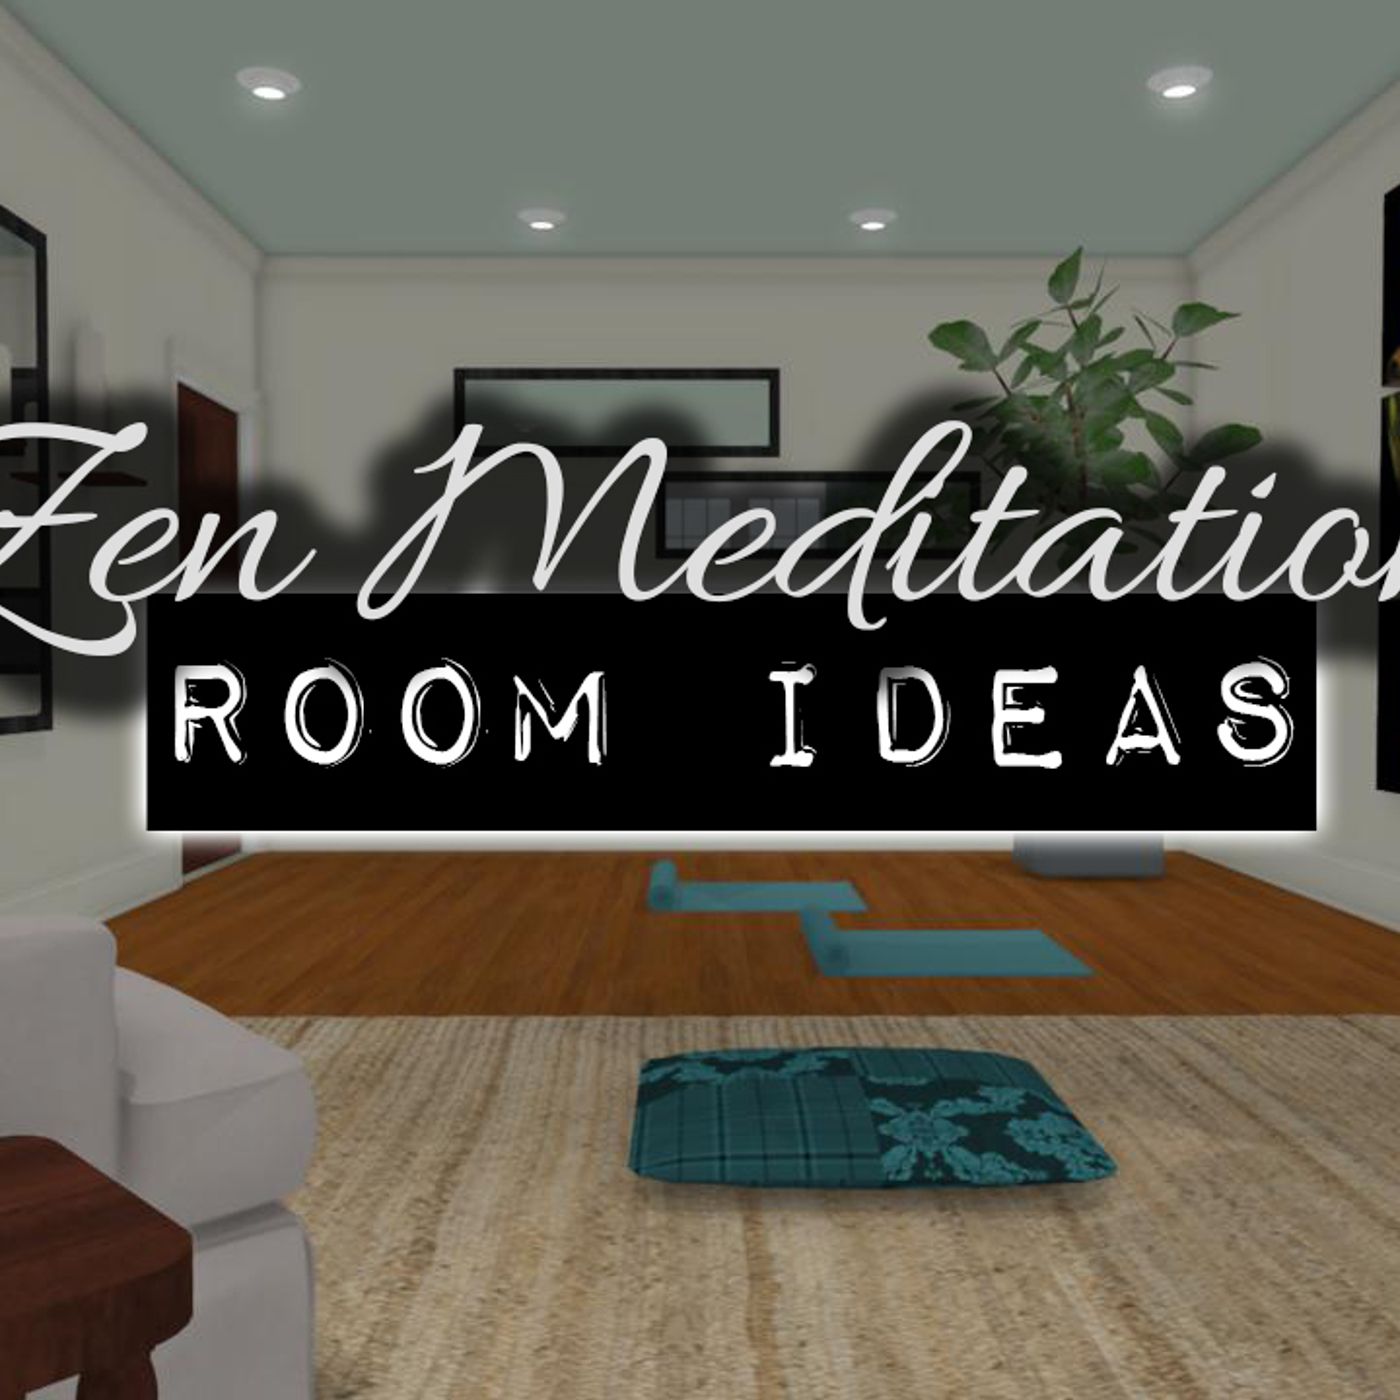 Zen Meditation Room Ideas | DIY & Home Design